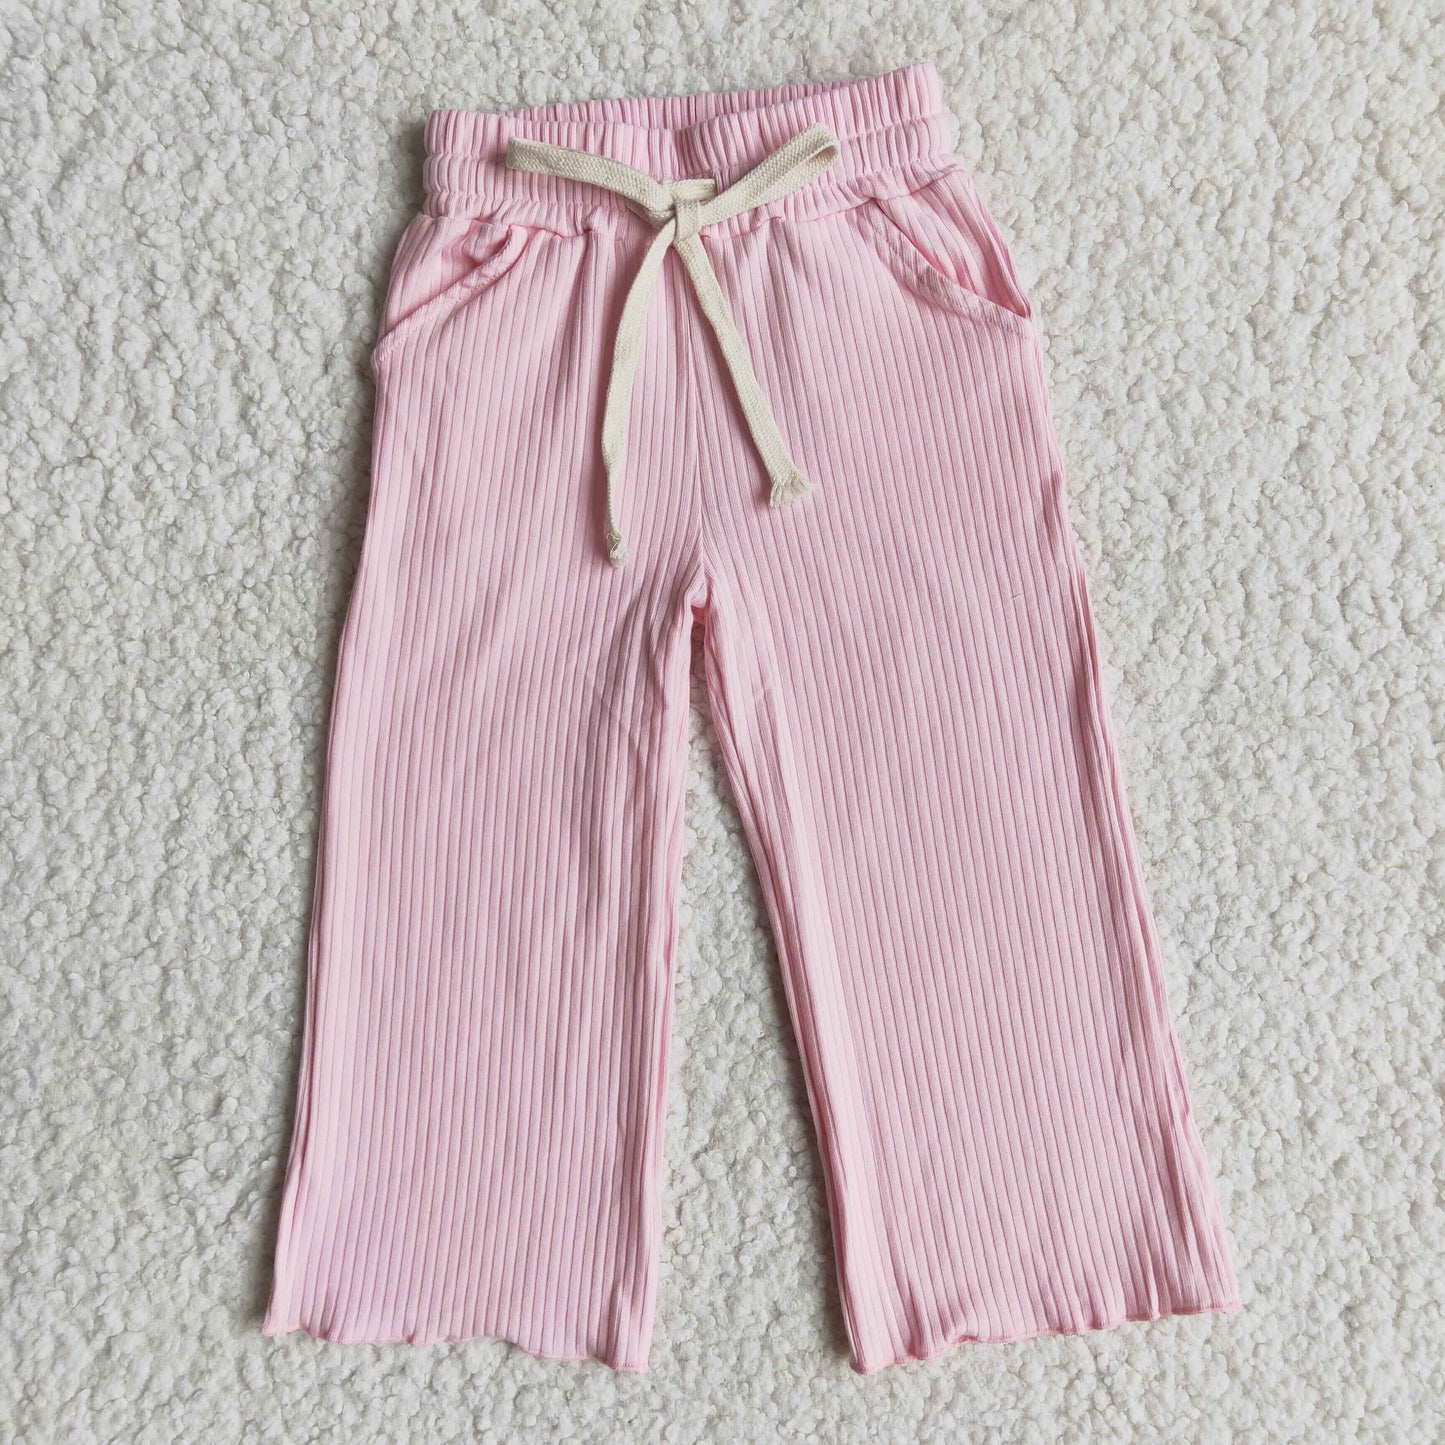 Pink stripe cotton elastic waistband pants